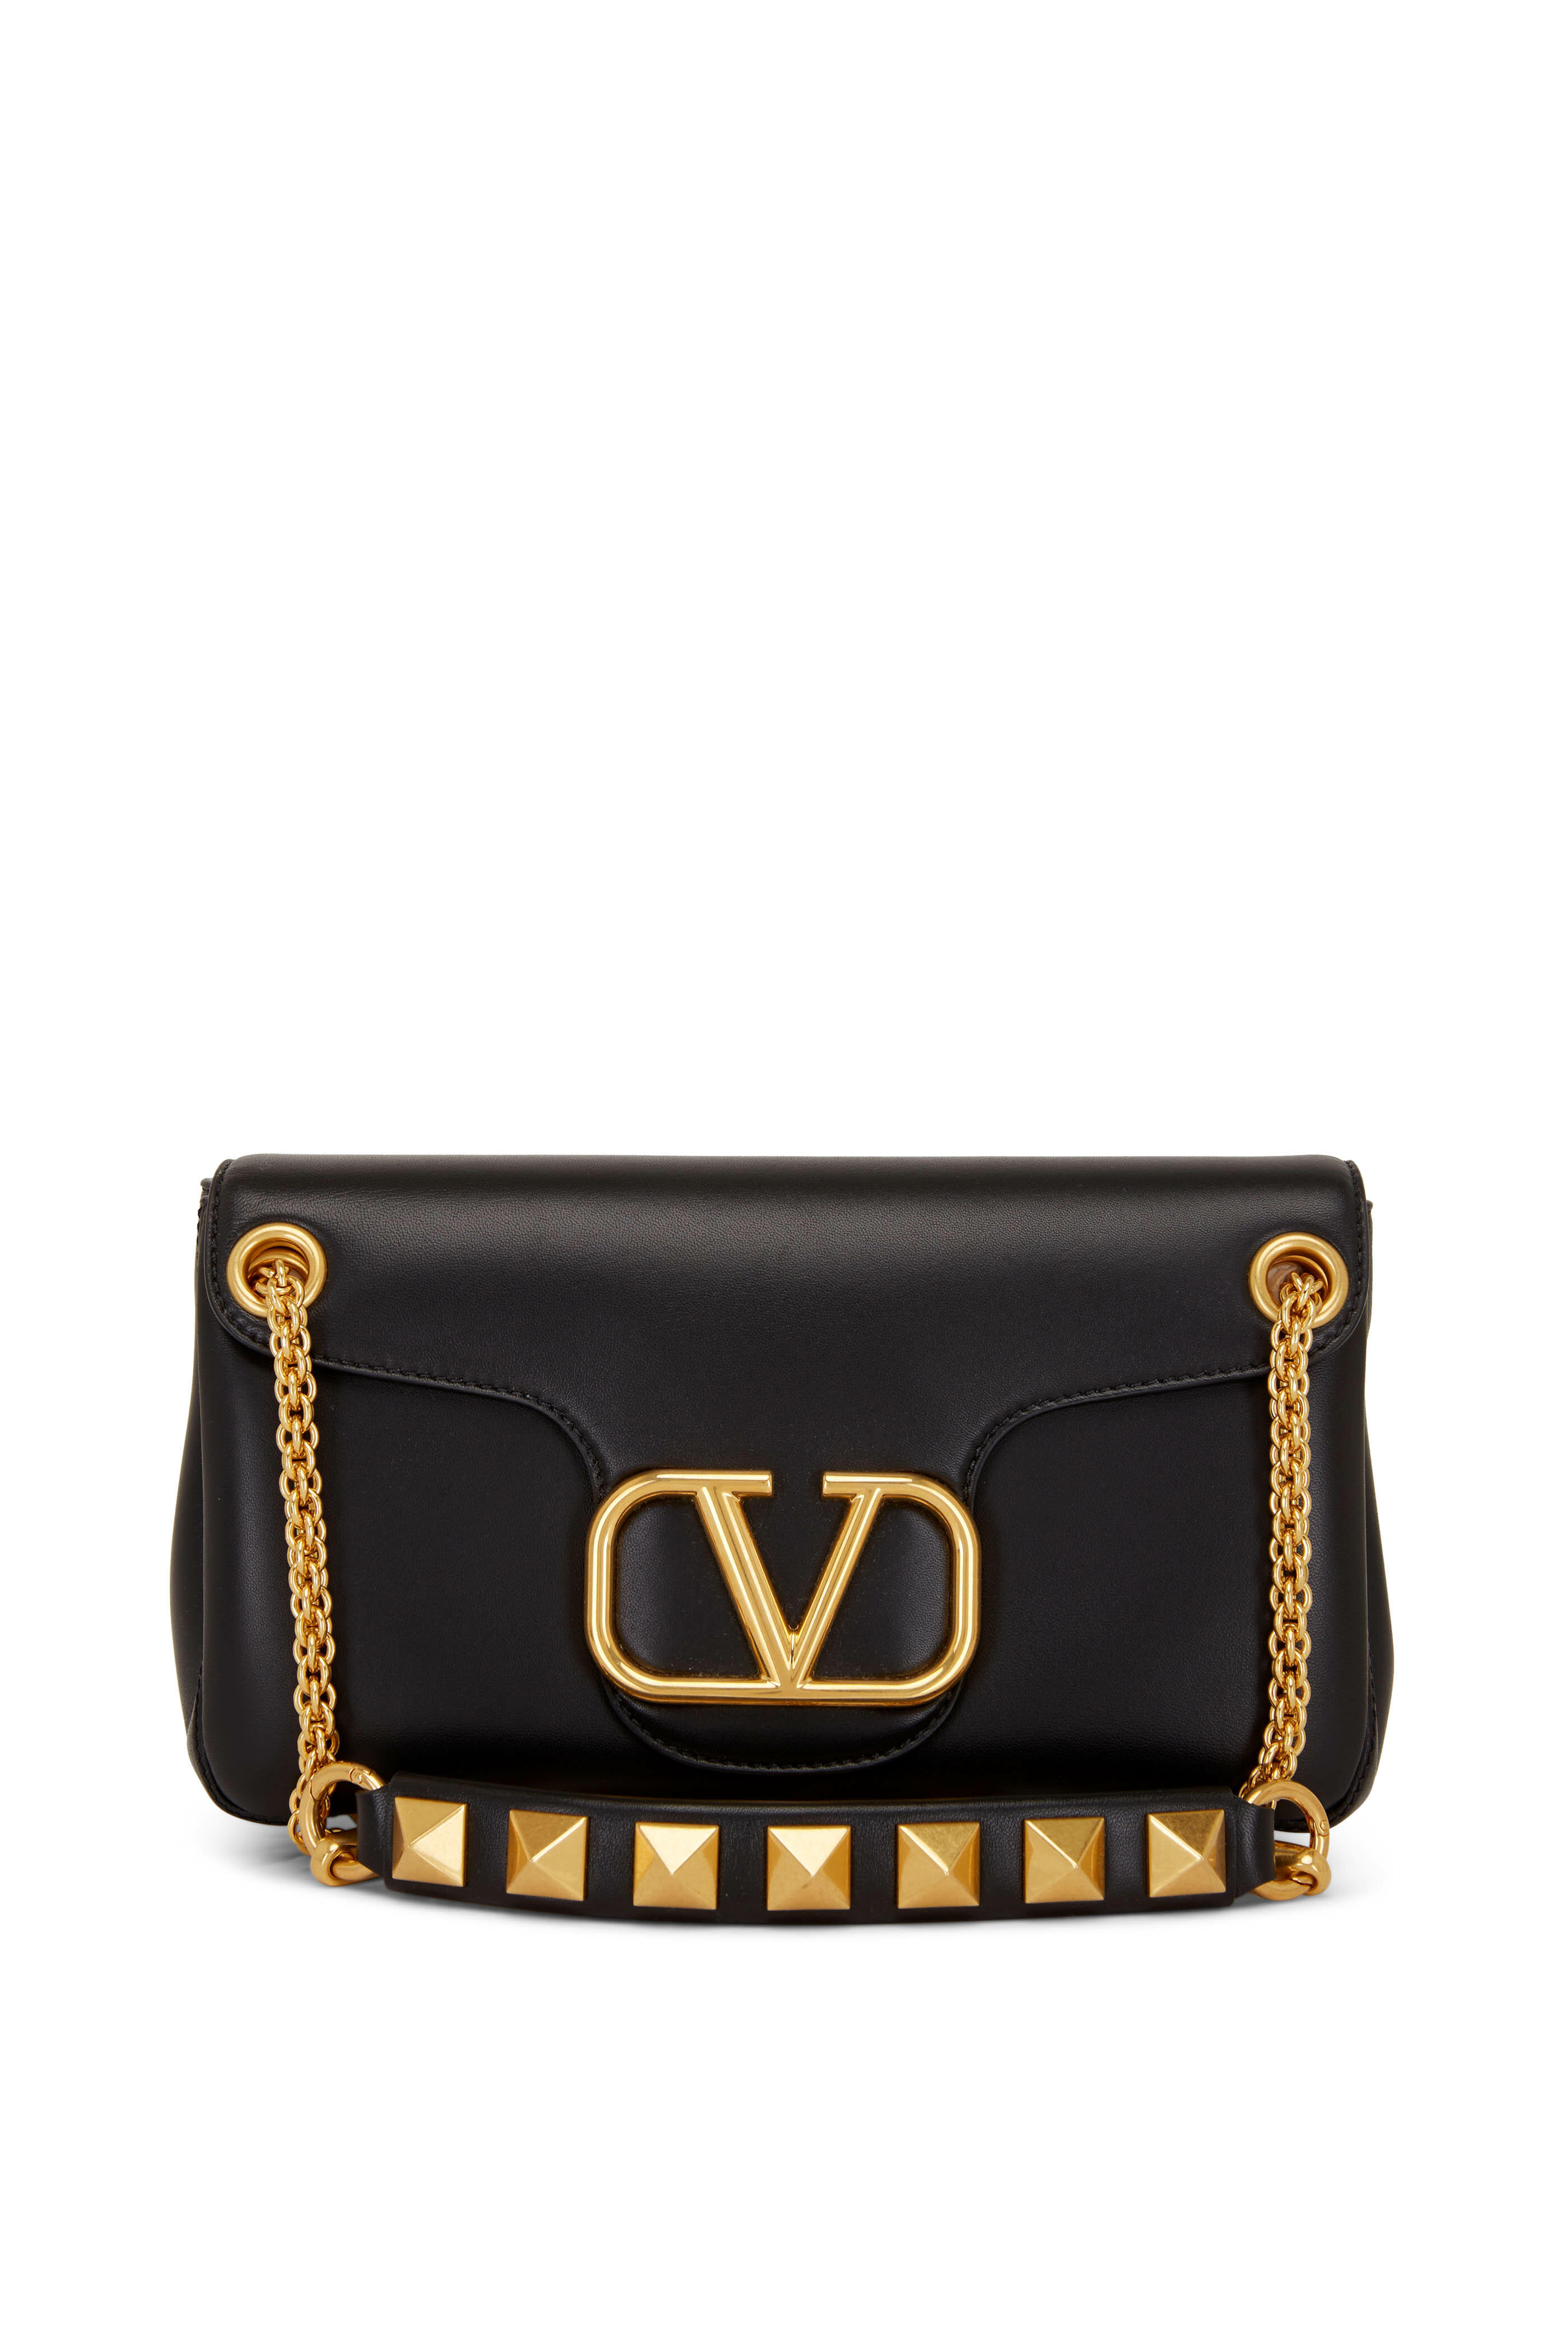 sorg mister temperamentet 鍔 Valentino Garavani - VLogo Black Leather Chain Shoulder Bag